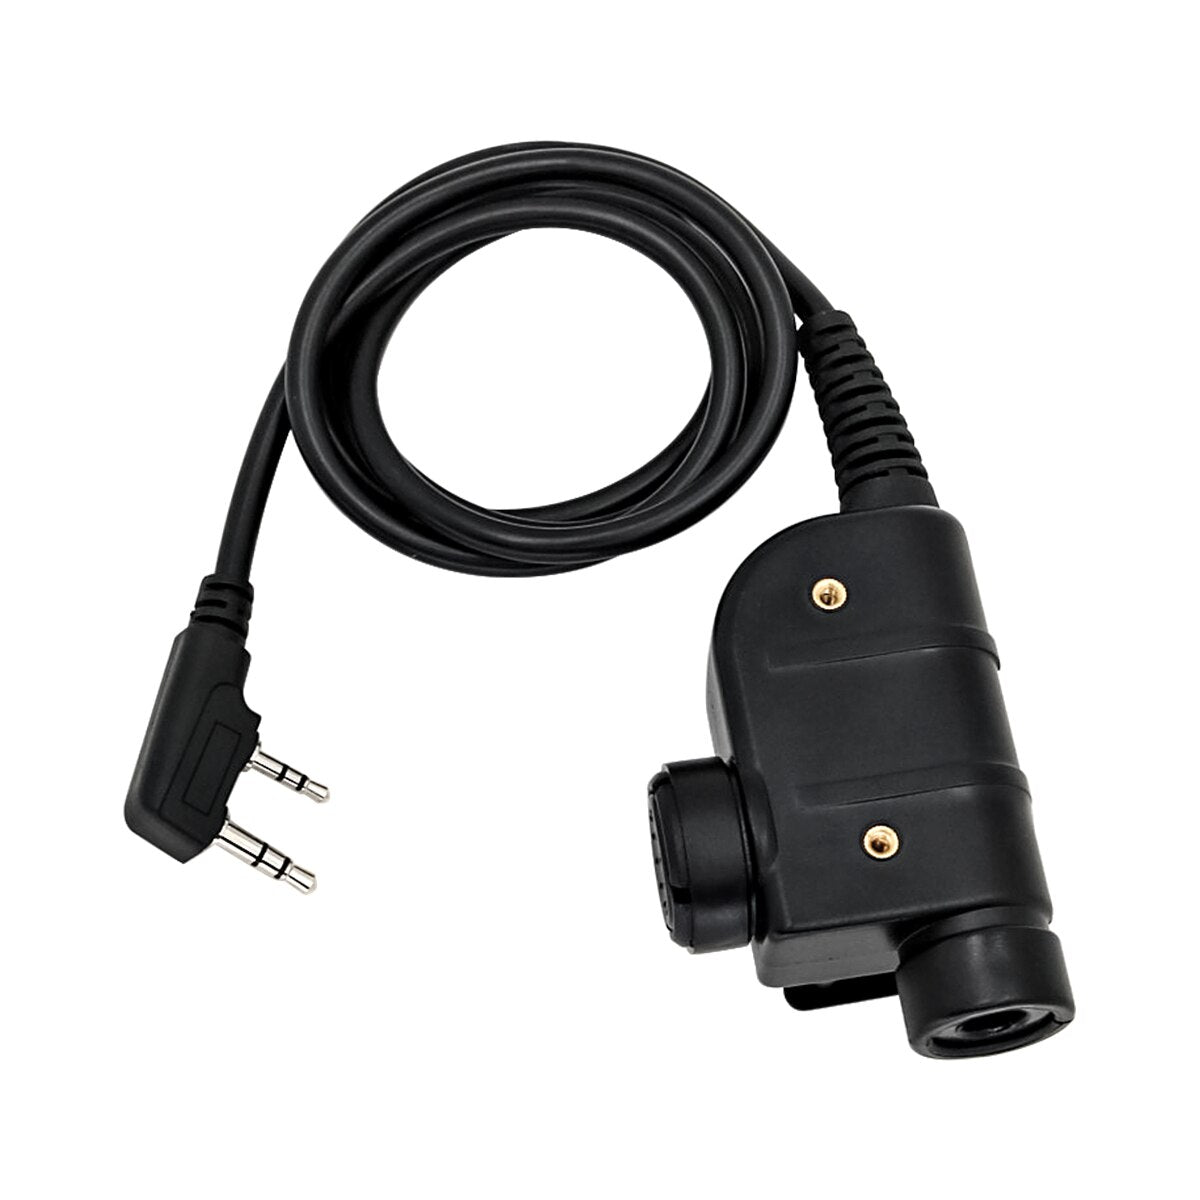 Tactical PTT Plug Military Headphone Adapter  KENWOOD Plug for Baofeng  UV-5R UV-5RA  Walkie Talkie Radio Hunting